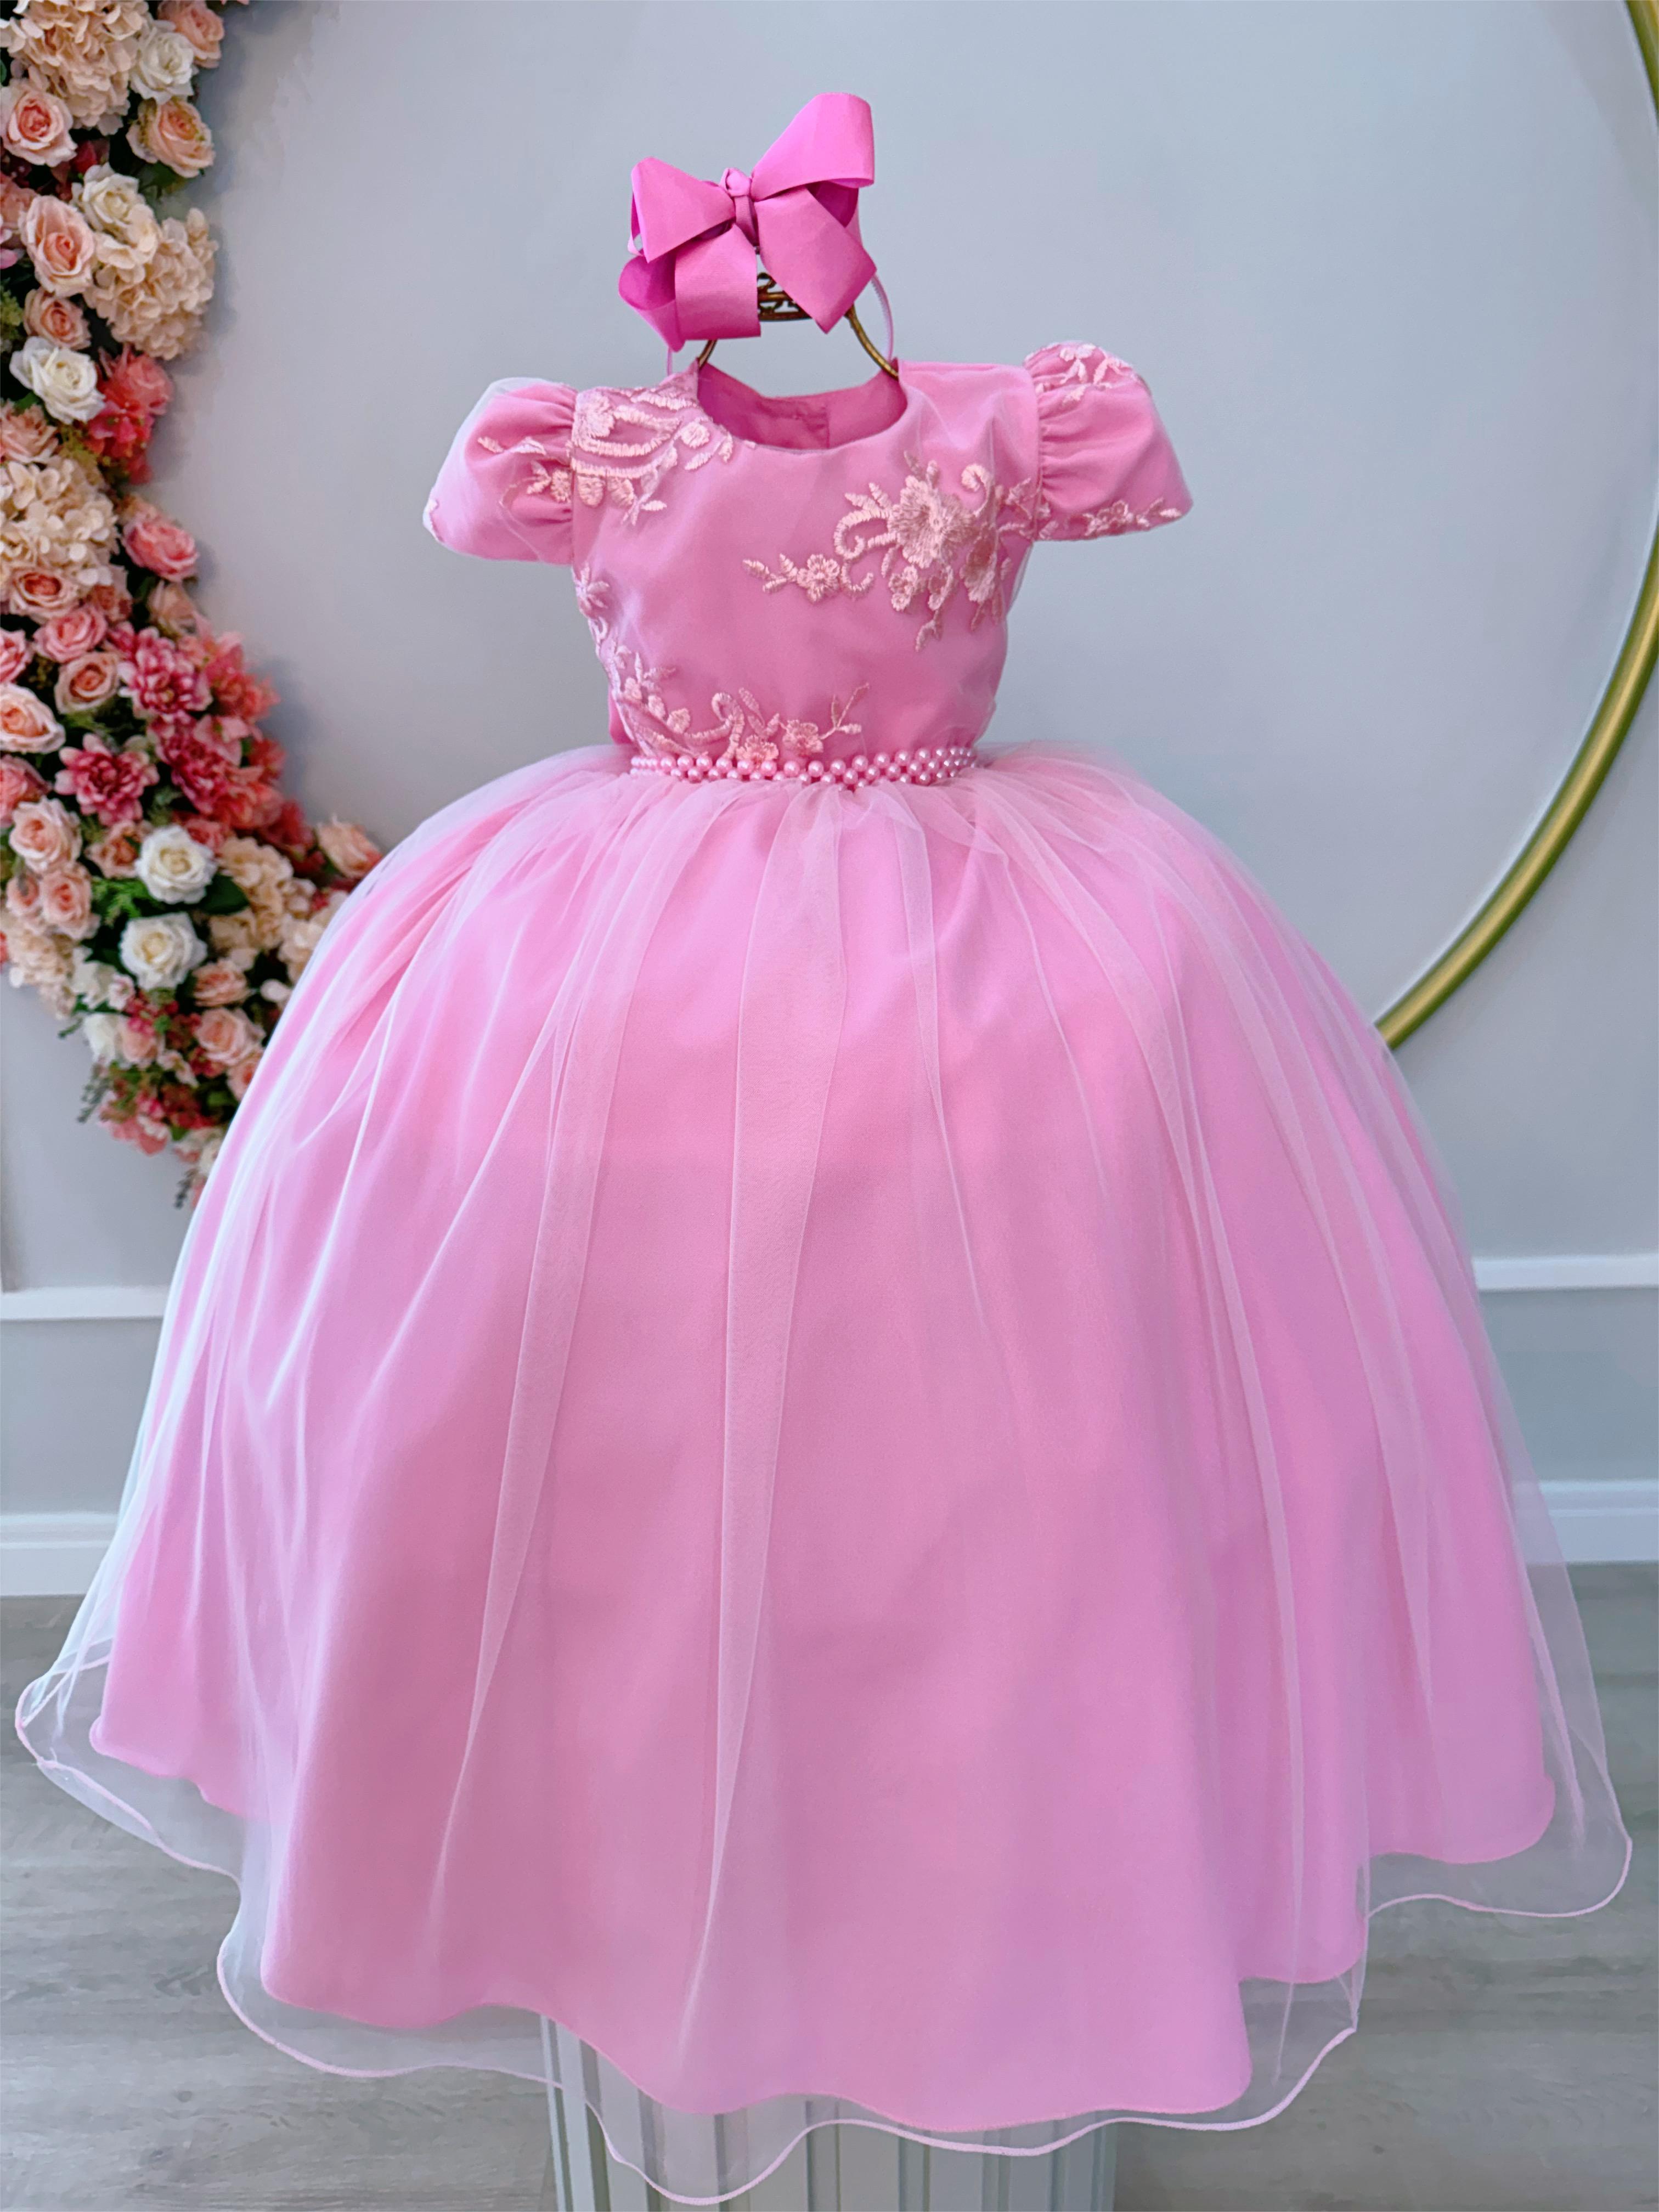 Vestido Infantil Rosa Damas Luxo C/ Renda e Cinto de Pérolas